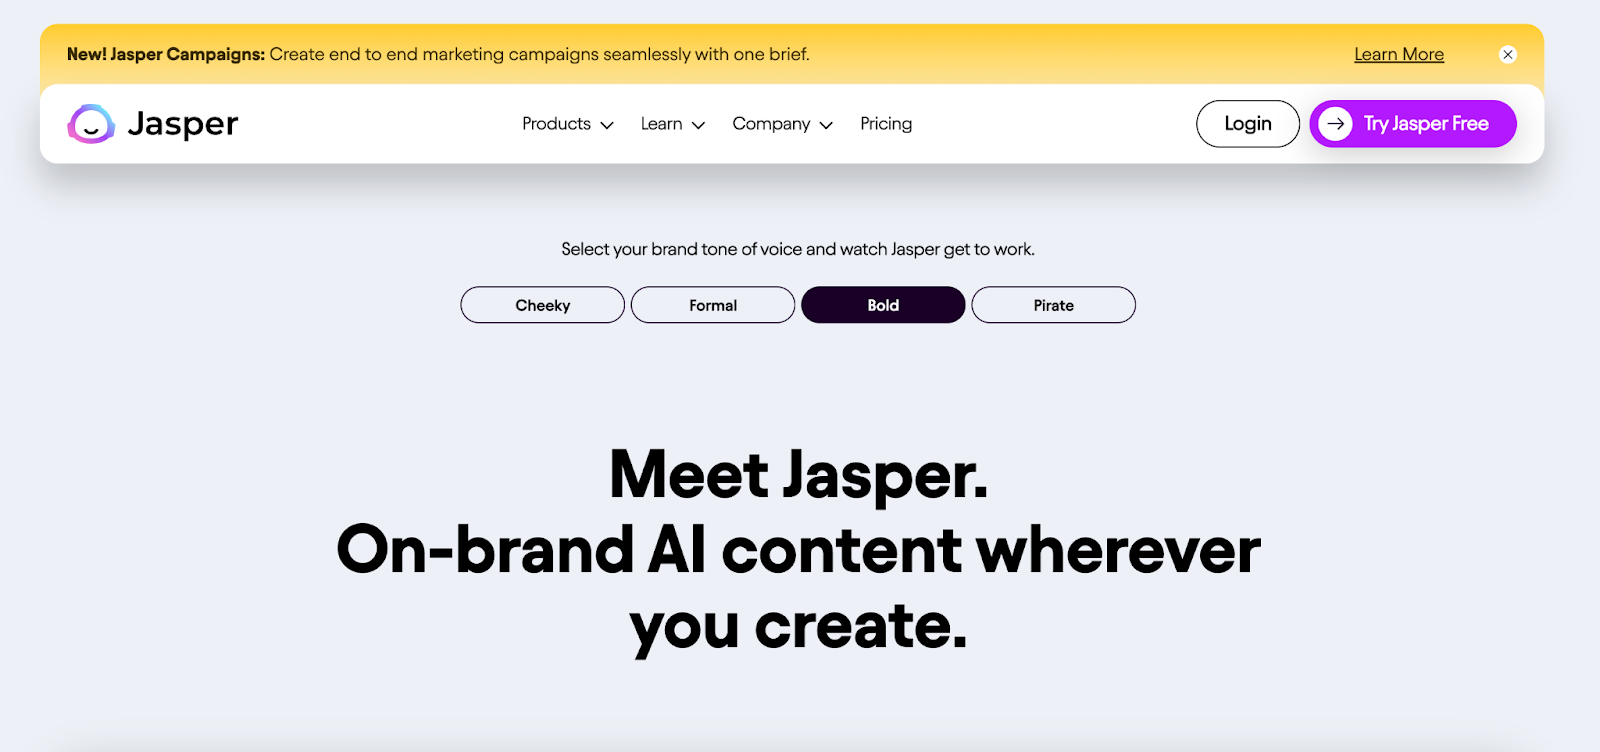 A screenshot of the Jasper AI website titled “Meet Jasper. On-brand AI content wherever you create.”